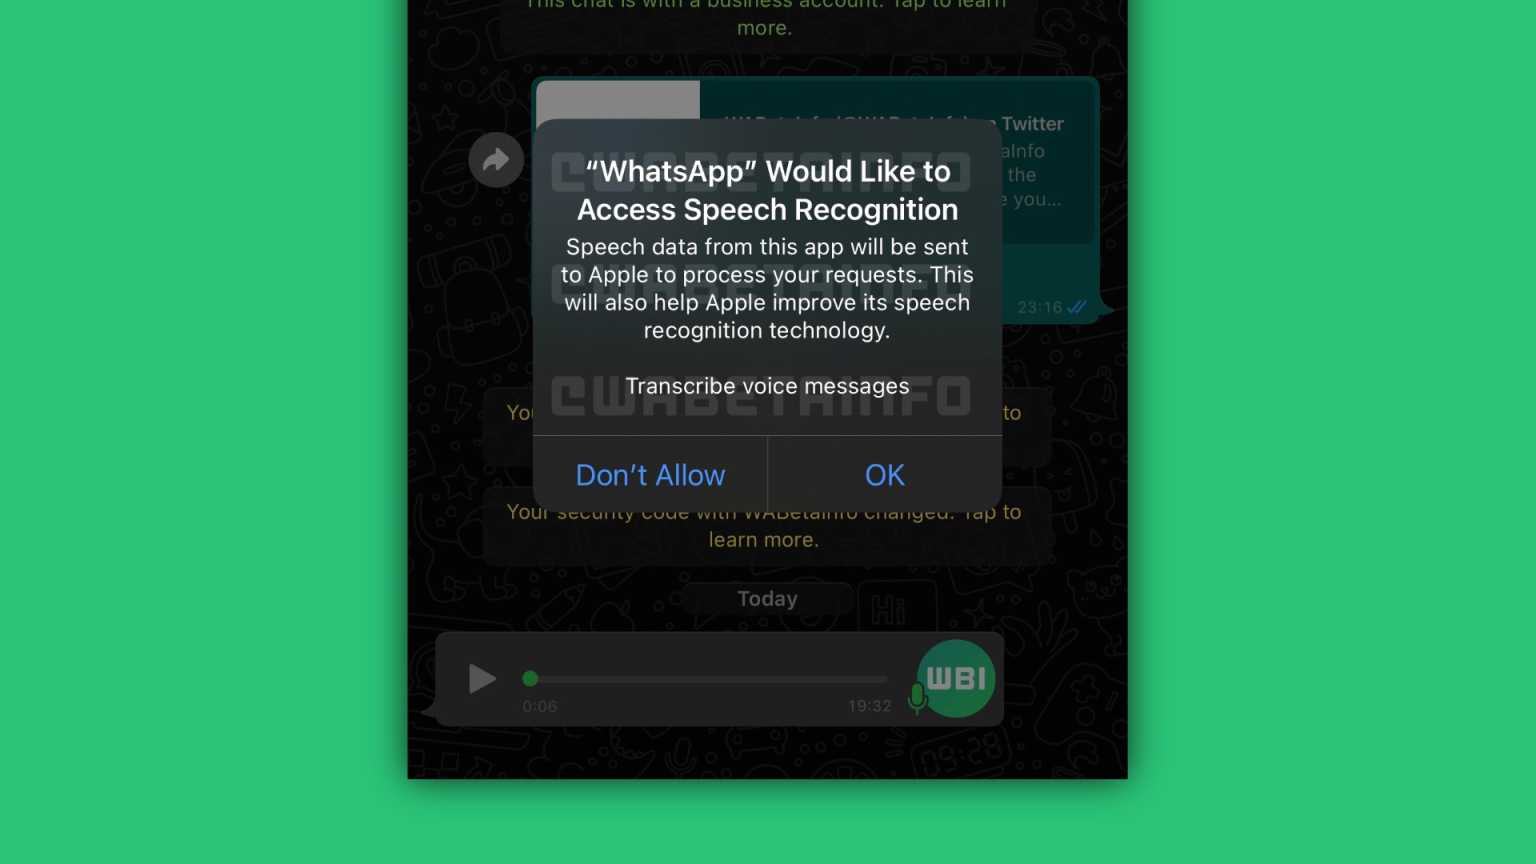 whatsapp-voice-message-transcription-feature-9to5mac-2